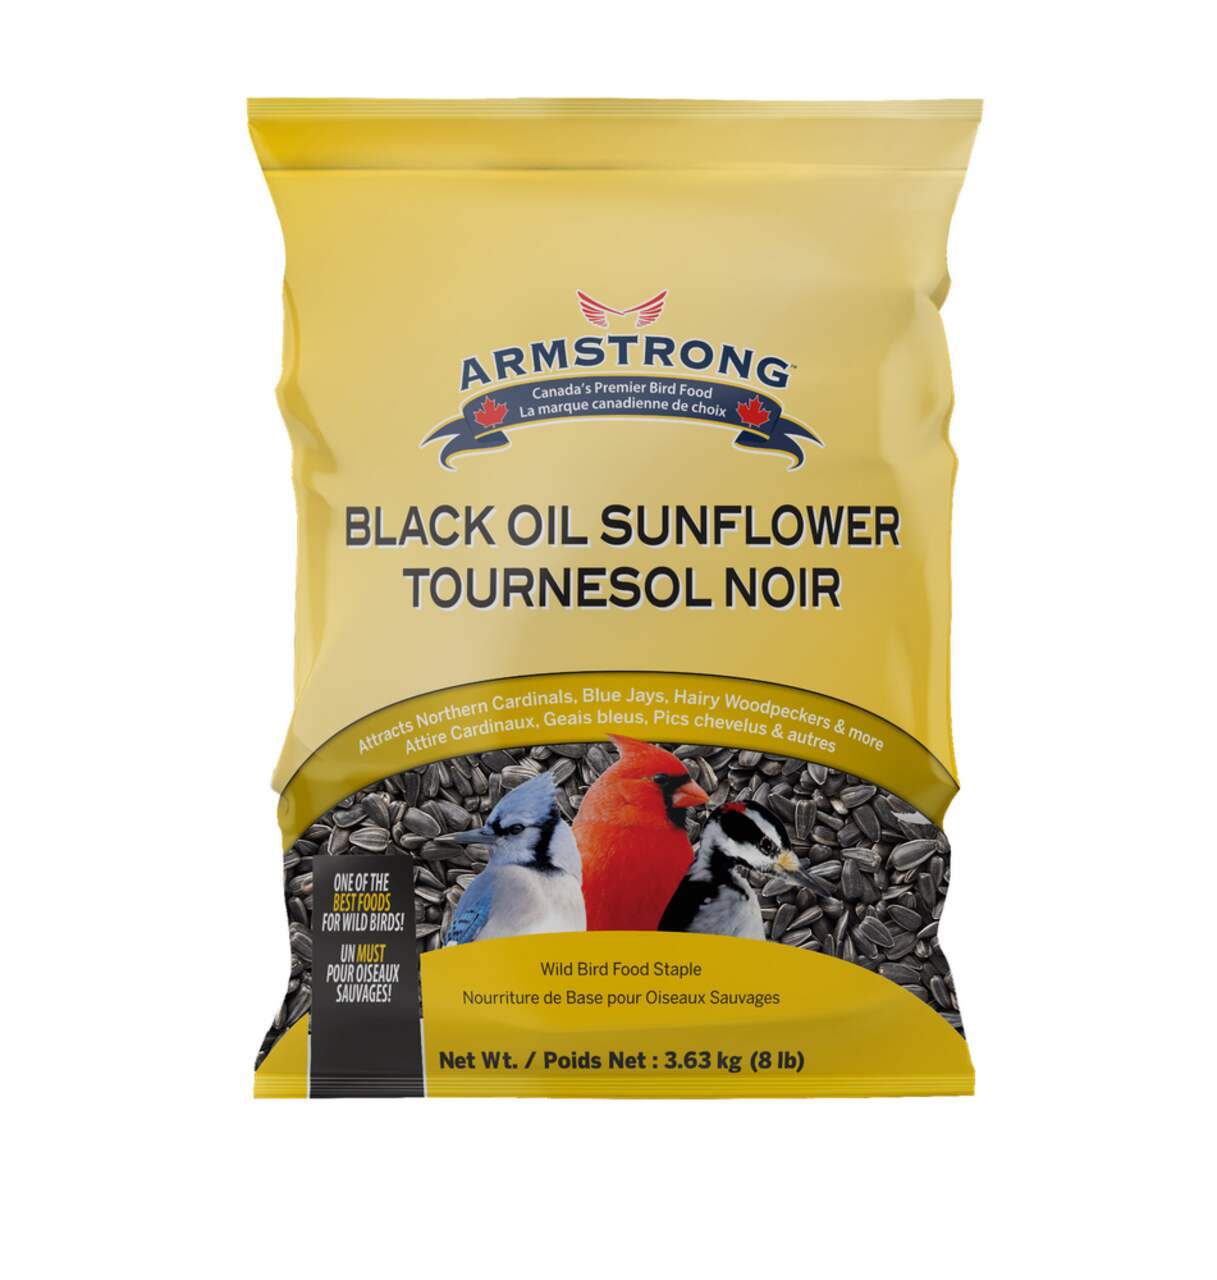 Energy-boosting sunflower seeds